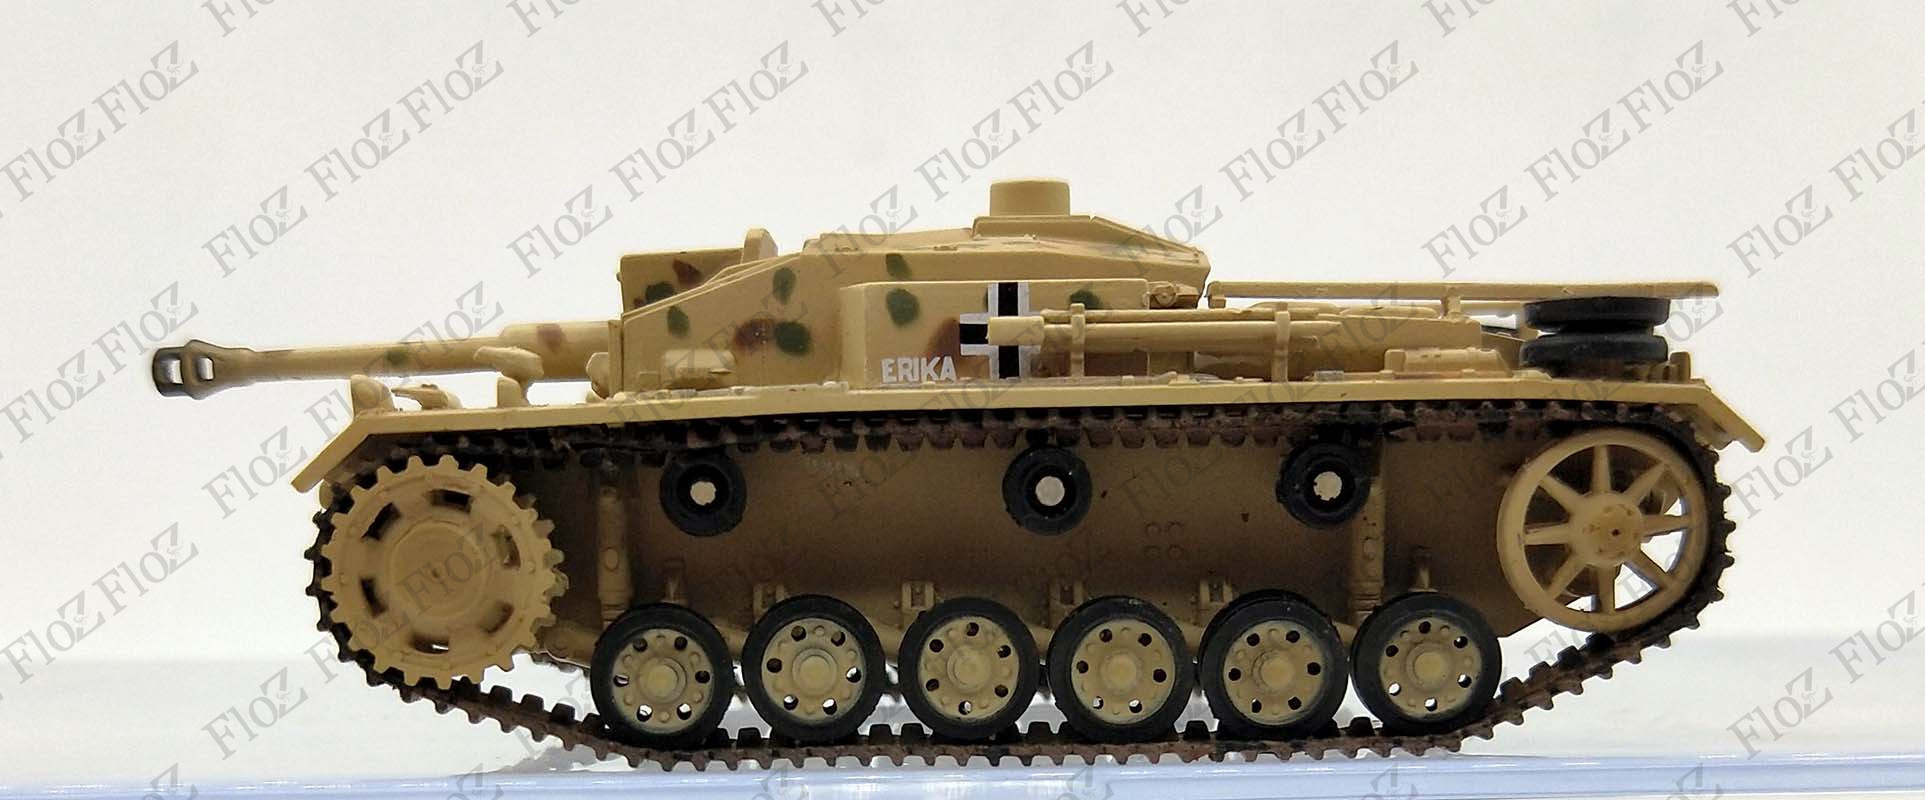 Wwii Sturmgeschutz Stug Iii Ausf F Italy 1943 1 72 Finished Tank Easy Model Ebay - stug iii b model 1940 fully detailed model no fun roblox